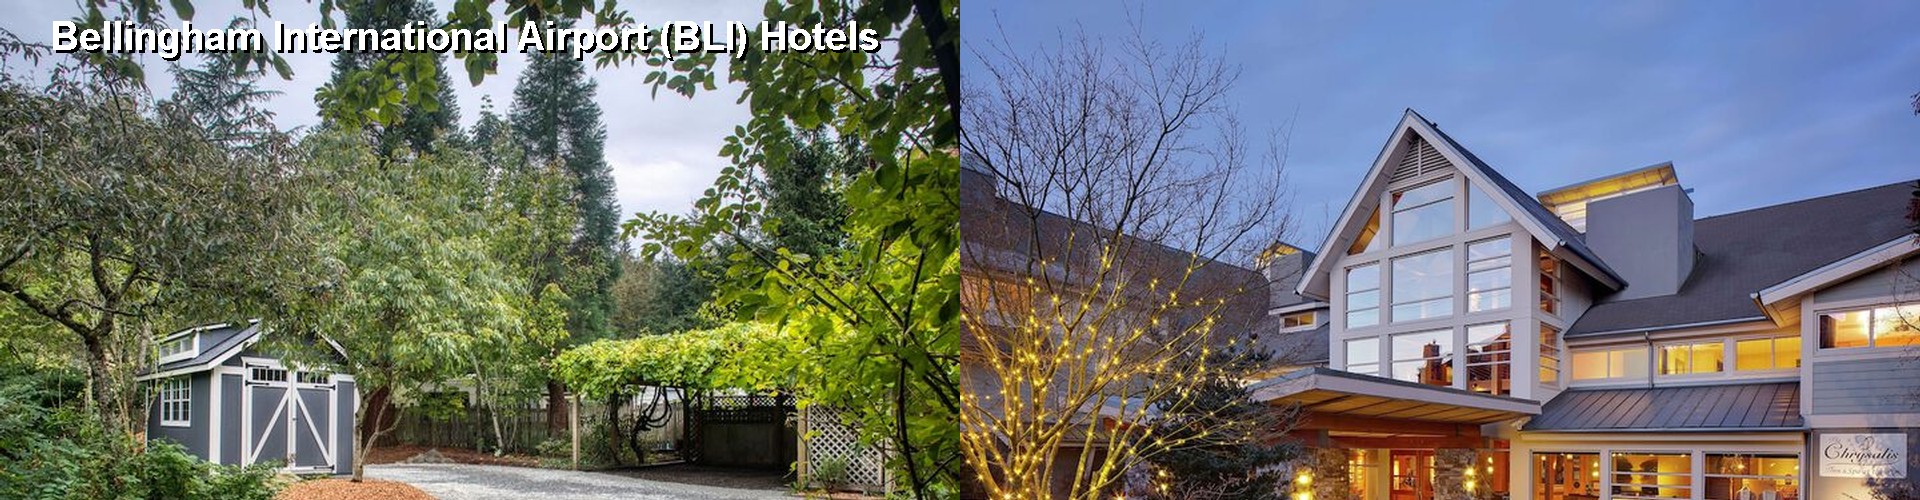 5 Best Hotels near Bellingham International Airport (BLI)